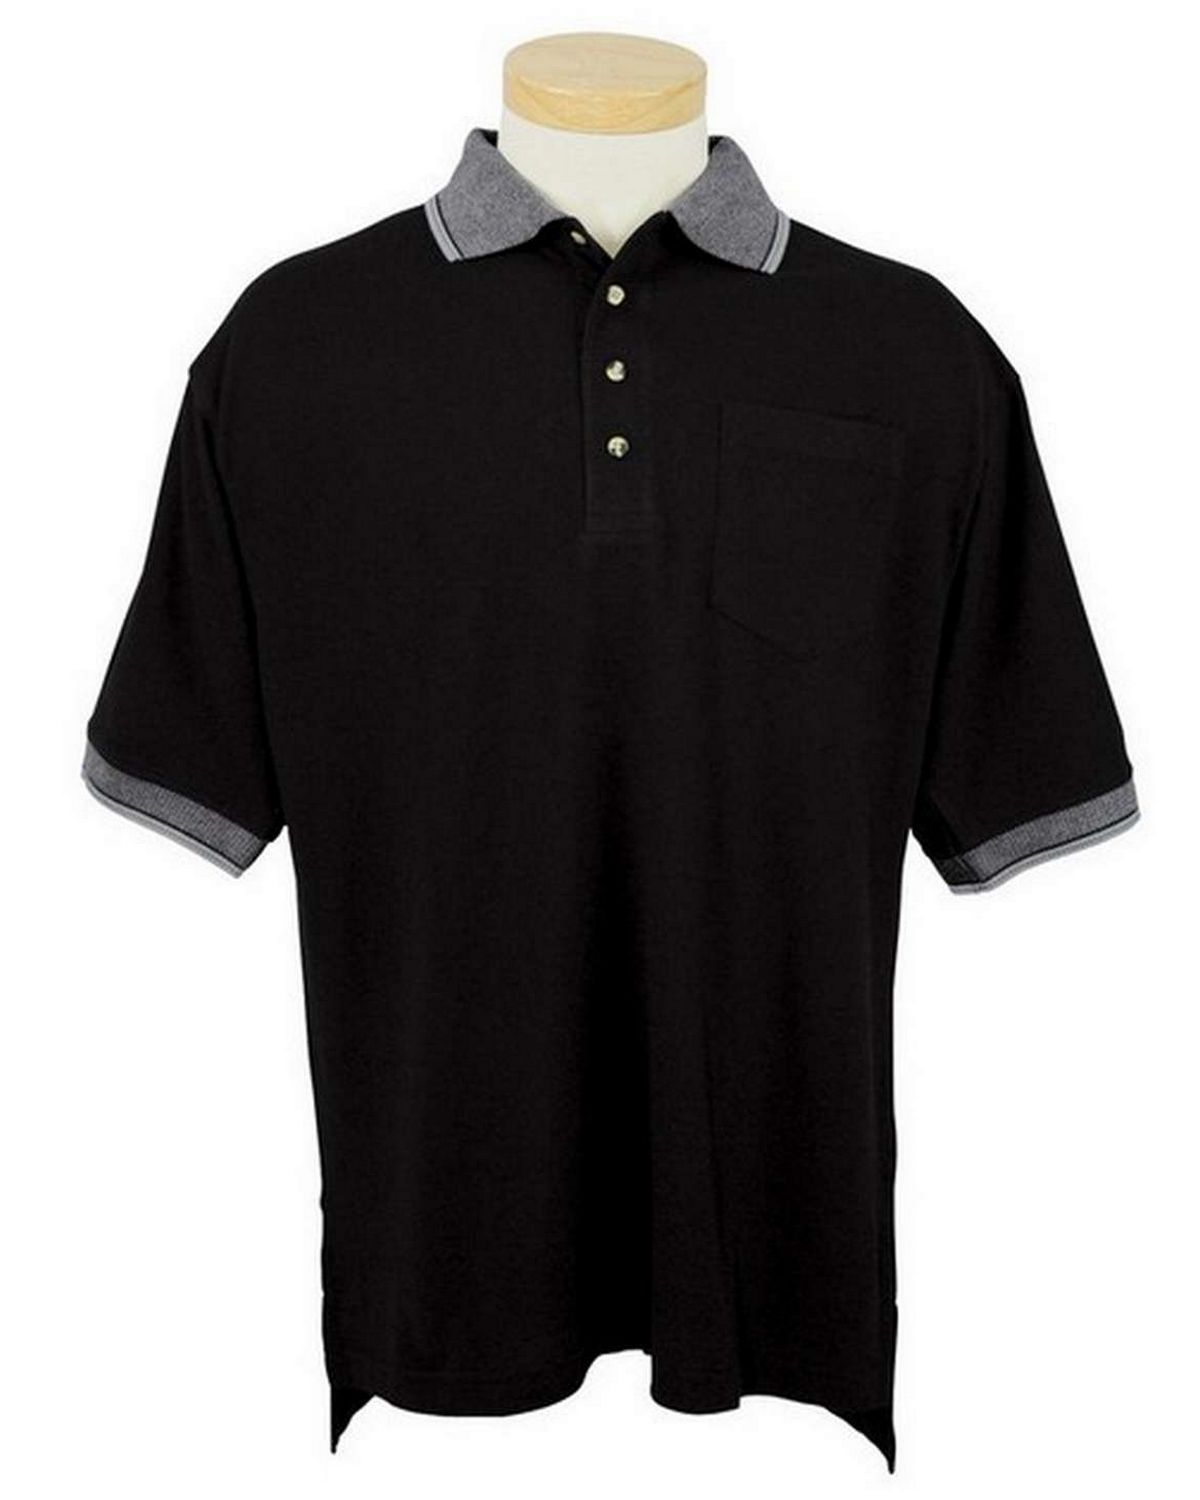 Tri-Mountain 197 Mercury Cotton Pique Pocketed Golf Shirt with Jacquard ...